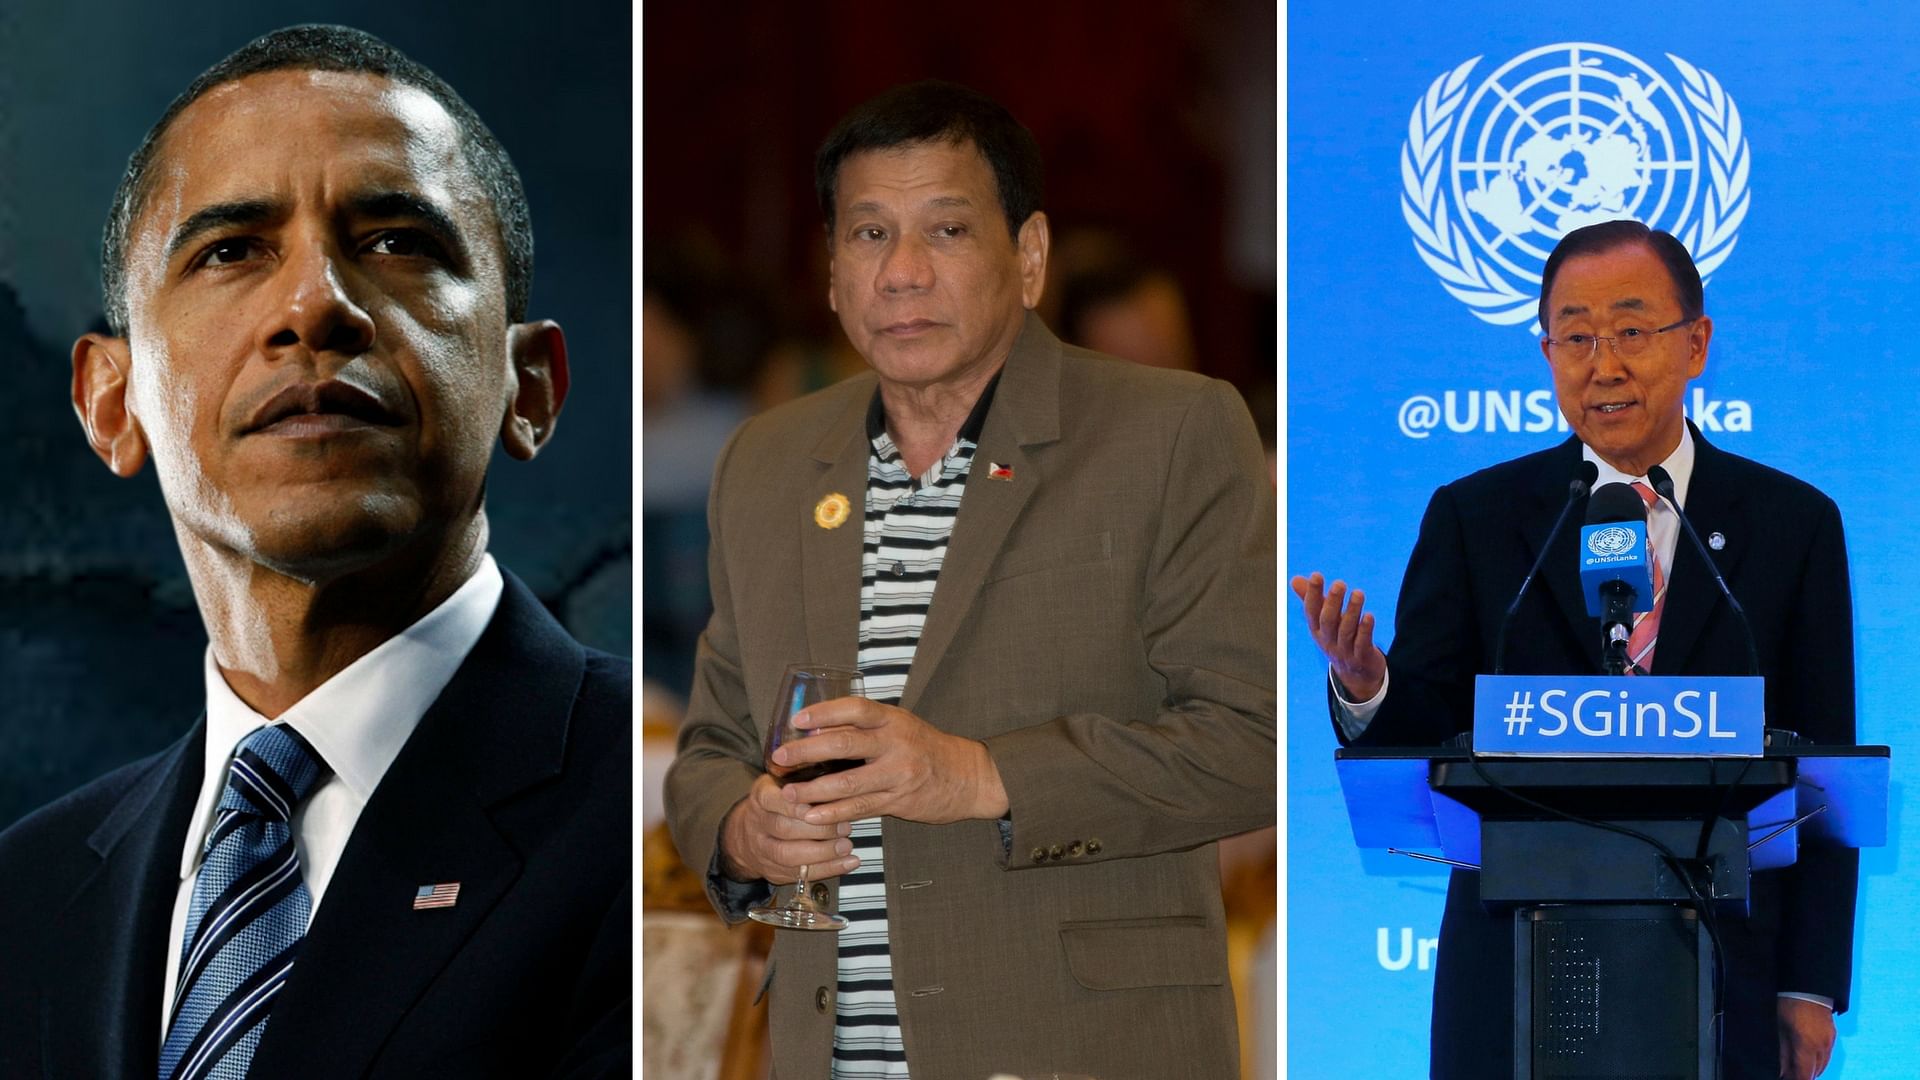 Philippine President Rodrigo Duterte insisted he didn’t insult Obama. (Photo: AP)